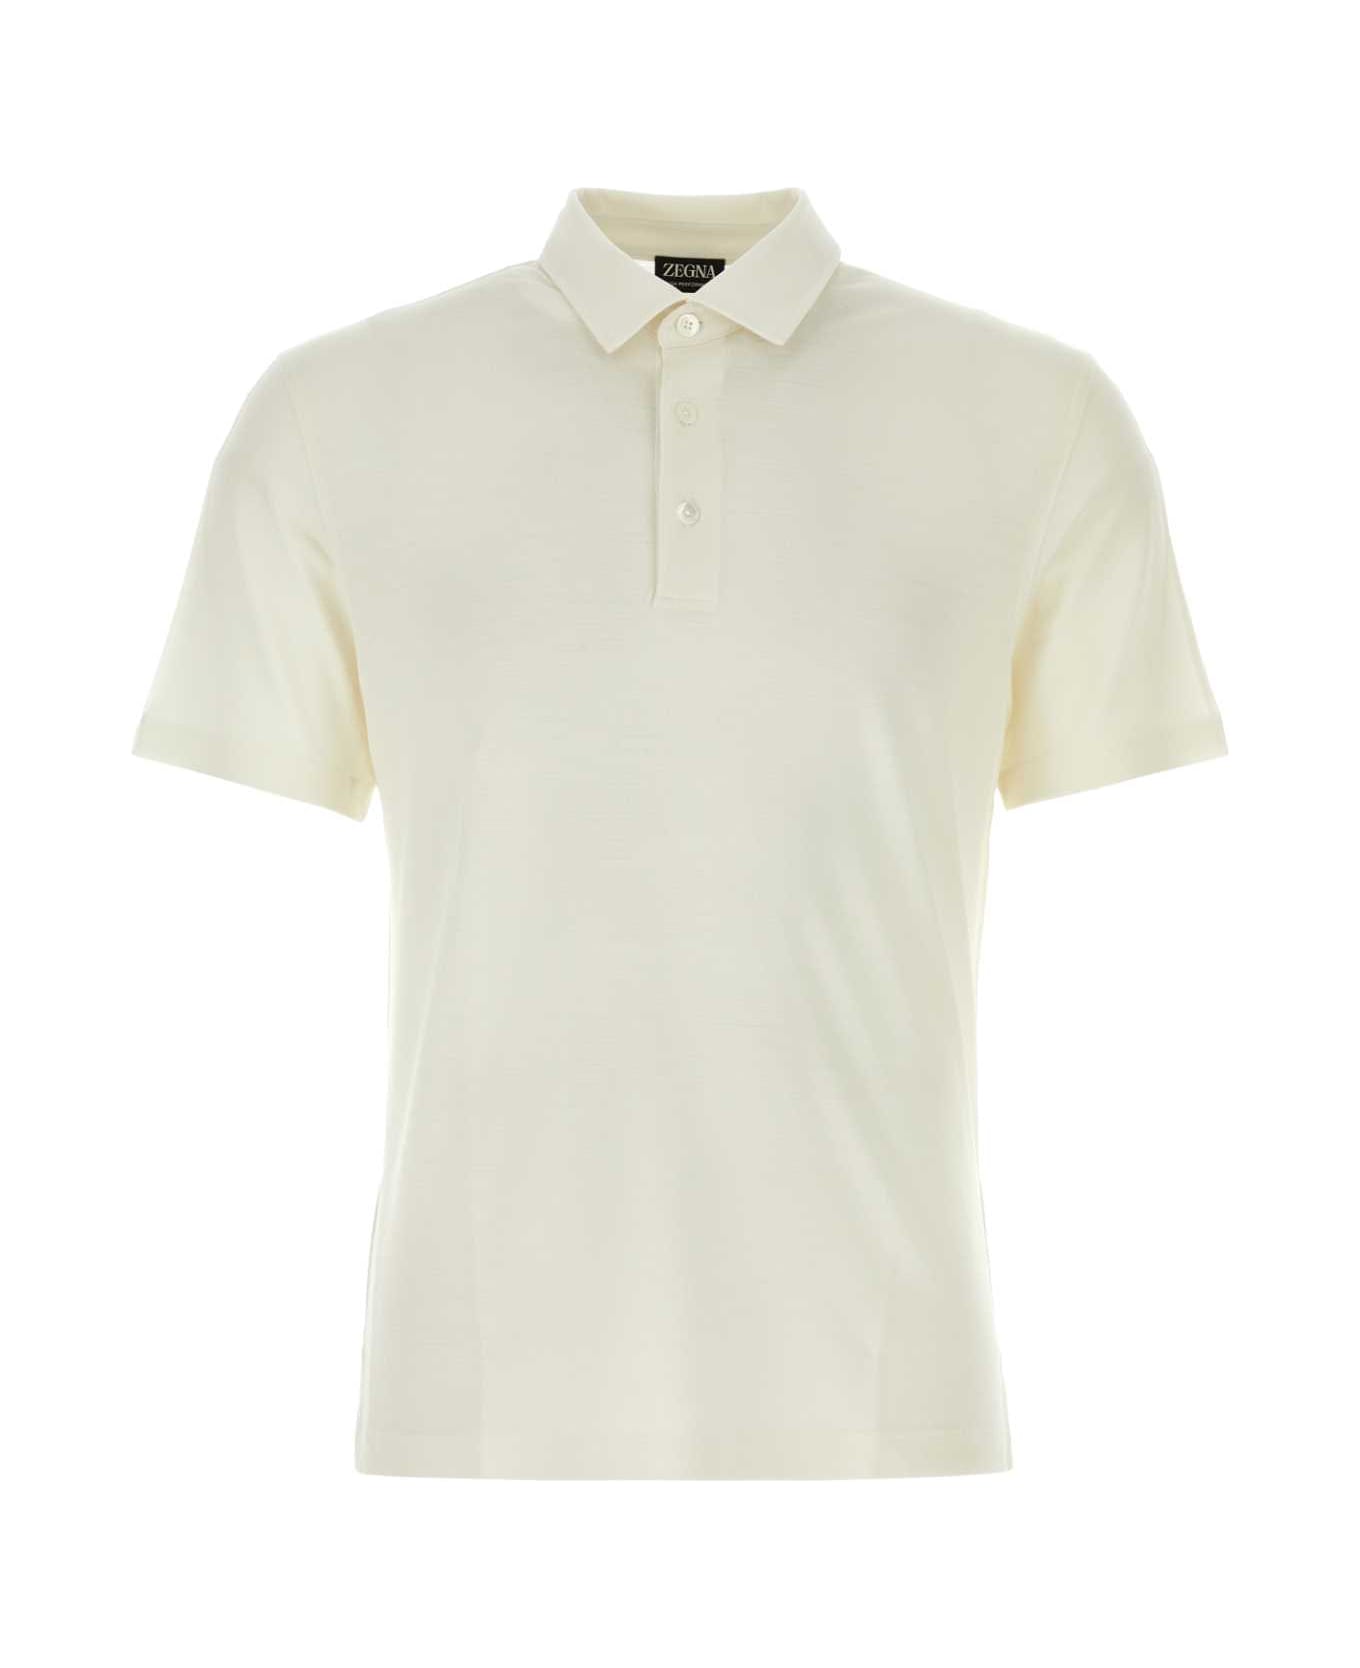 Zegna Ivory Piquet Polo Shirt - N01 ポロシャツ